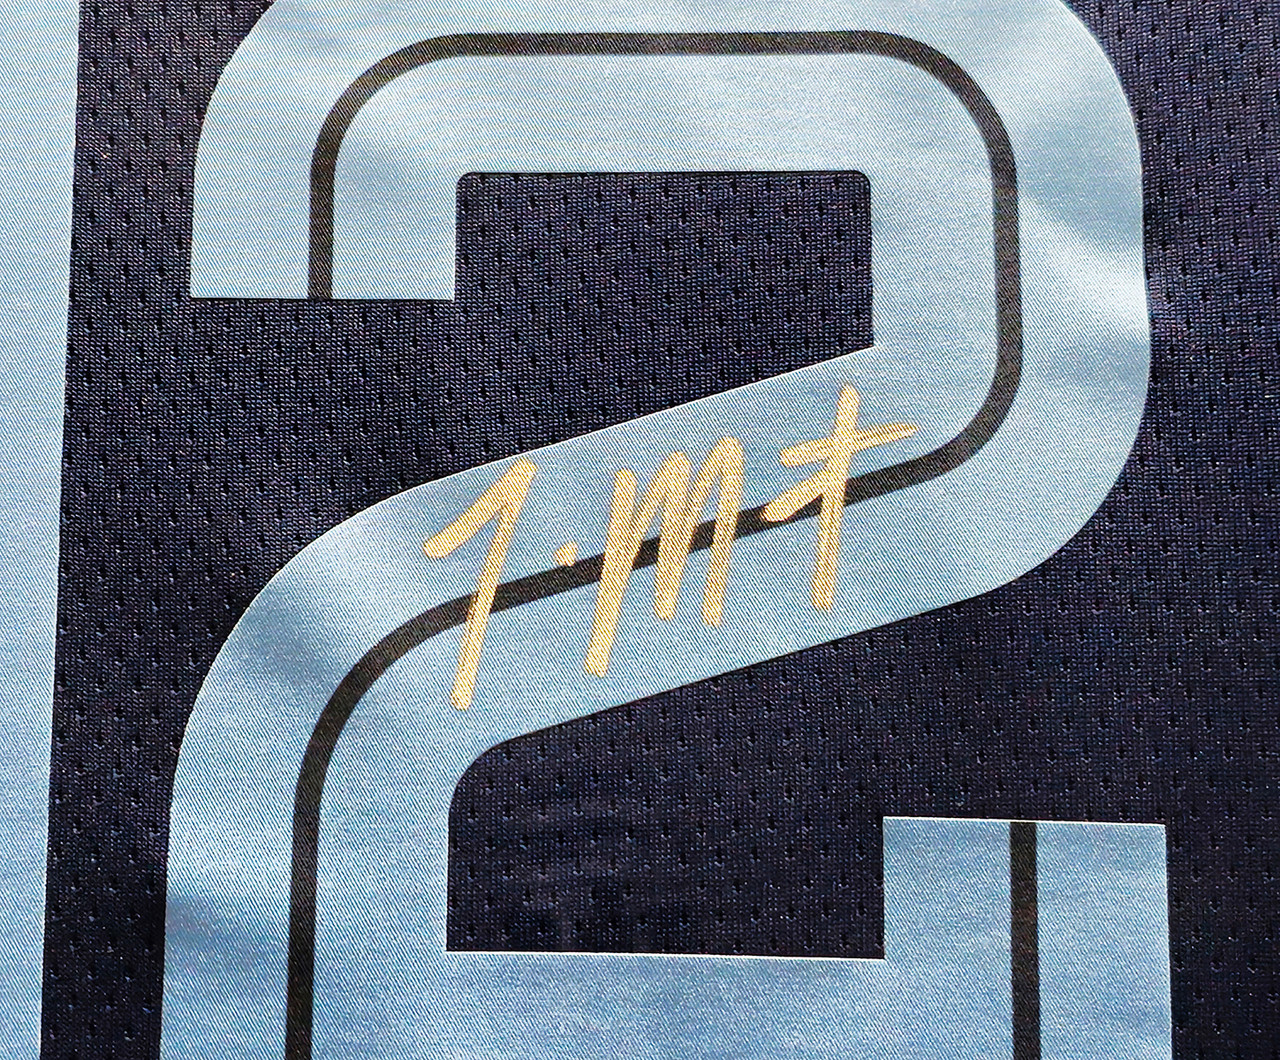 Memphis Grizzlies Ja Morant Autographed Black Nike City Edition Swingman  Jersey Size 52 Beckett BAS QR Stock #218586 - Mill Creek Sports